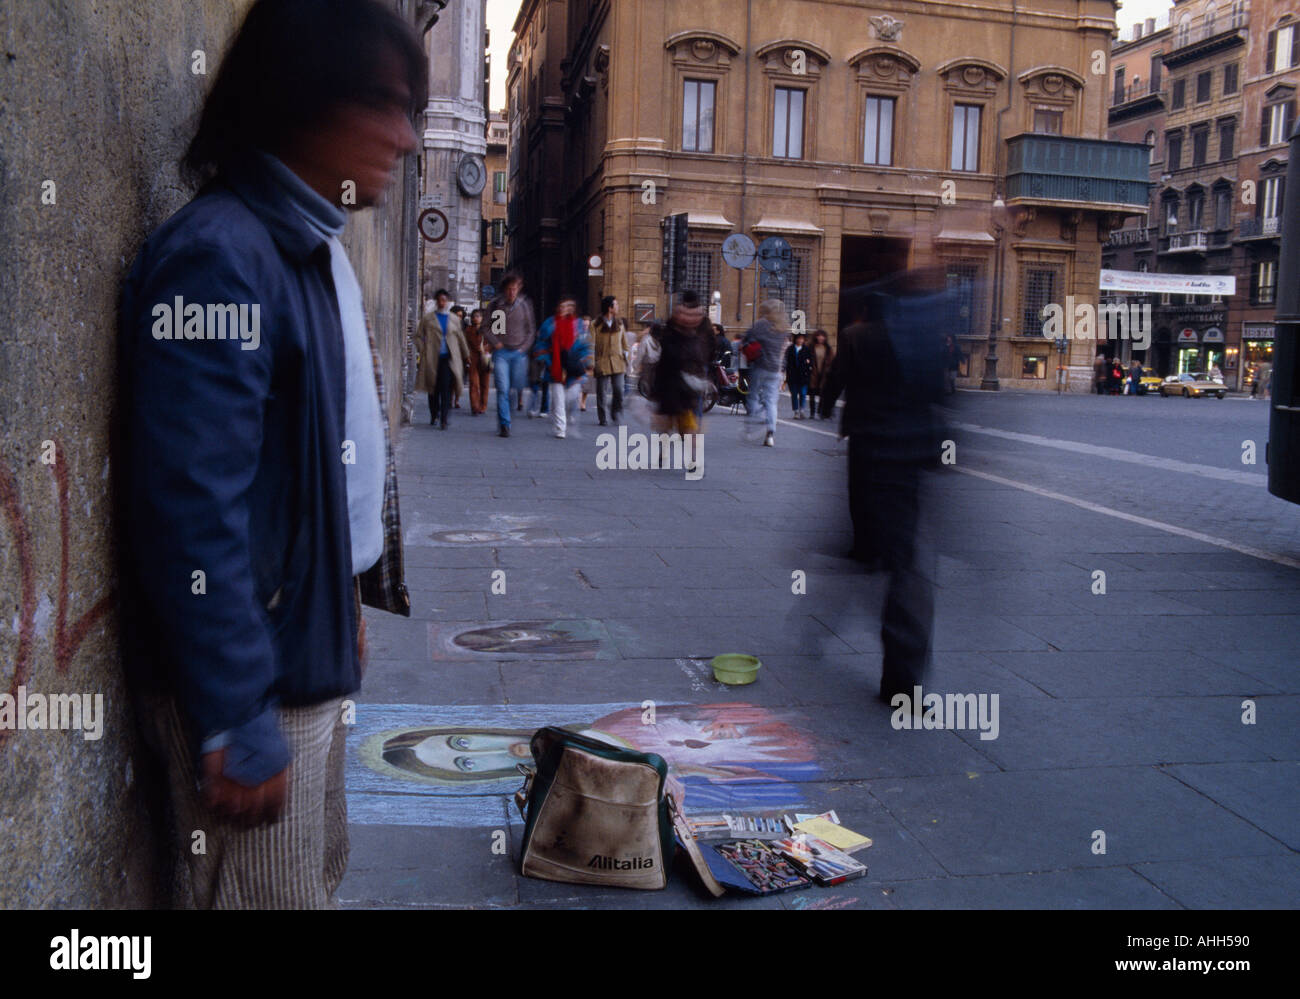 Reise Reportagen Fotografie - Street Szene eines Künstlers in Rom in Italien in Europa. Fotojournalismus Kunst Menschen Stockfoto